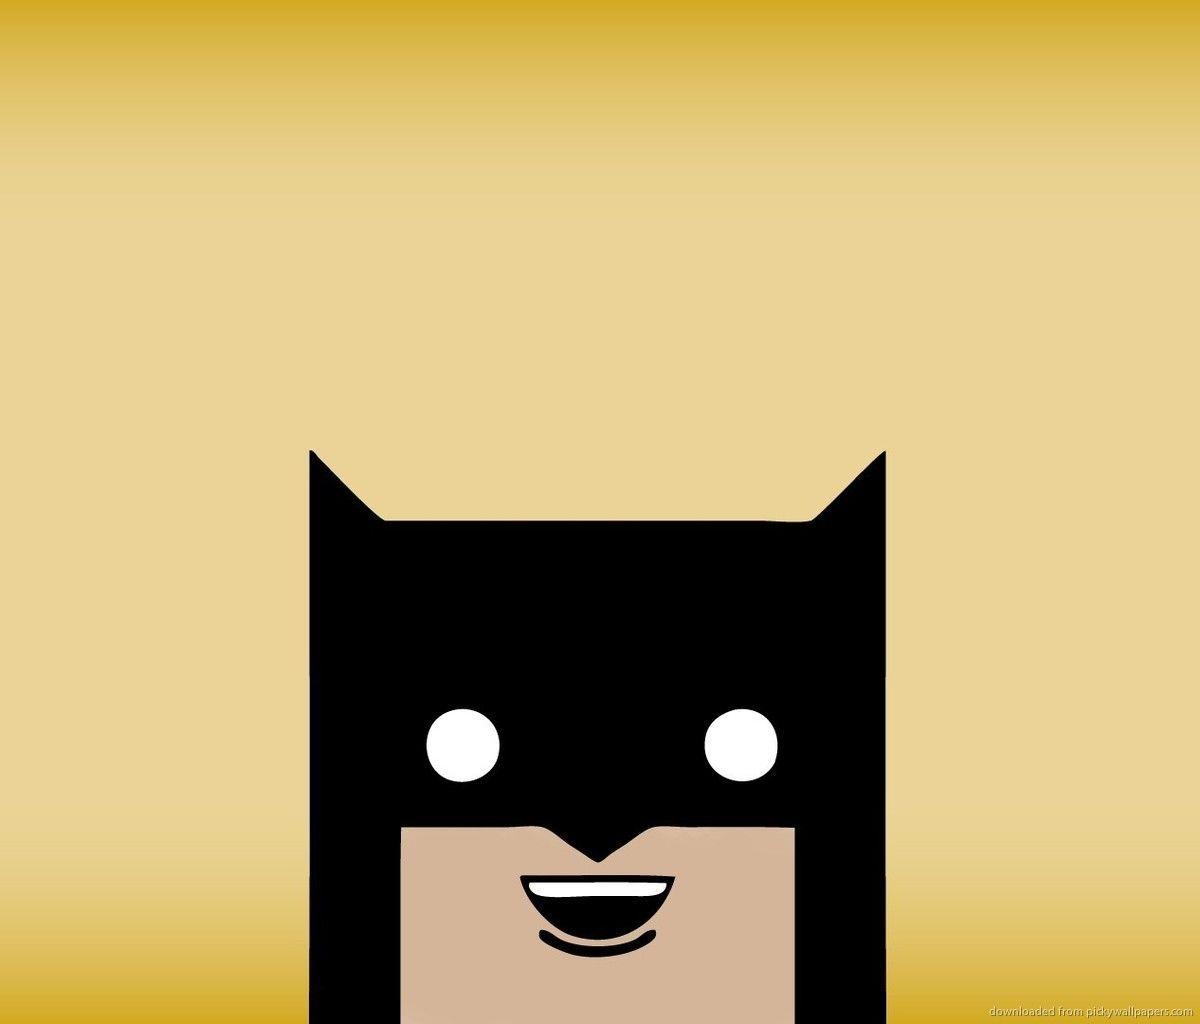 Download Funny Batman Wallpaper For Samsung Galaxy Tab. background